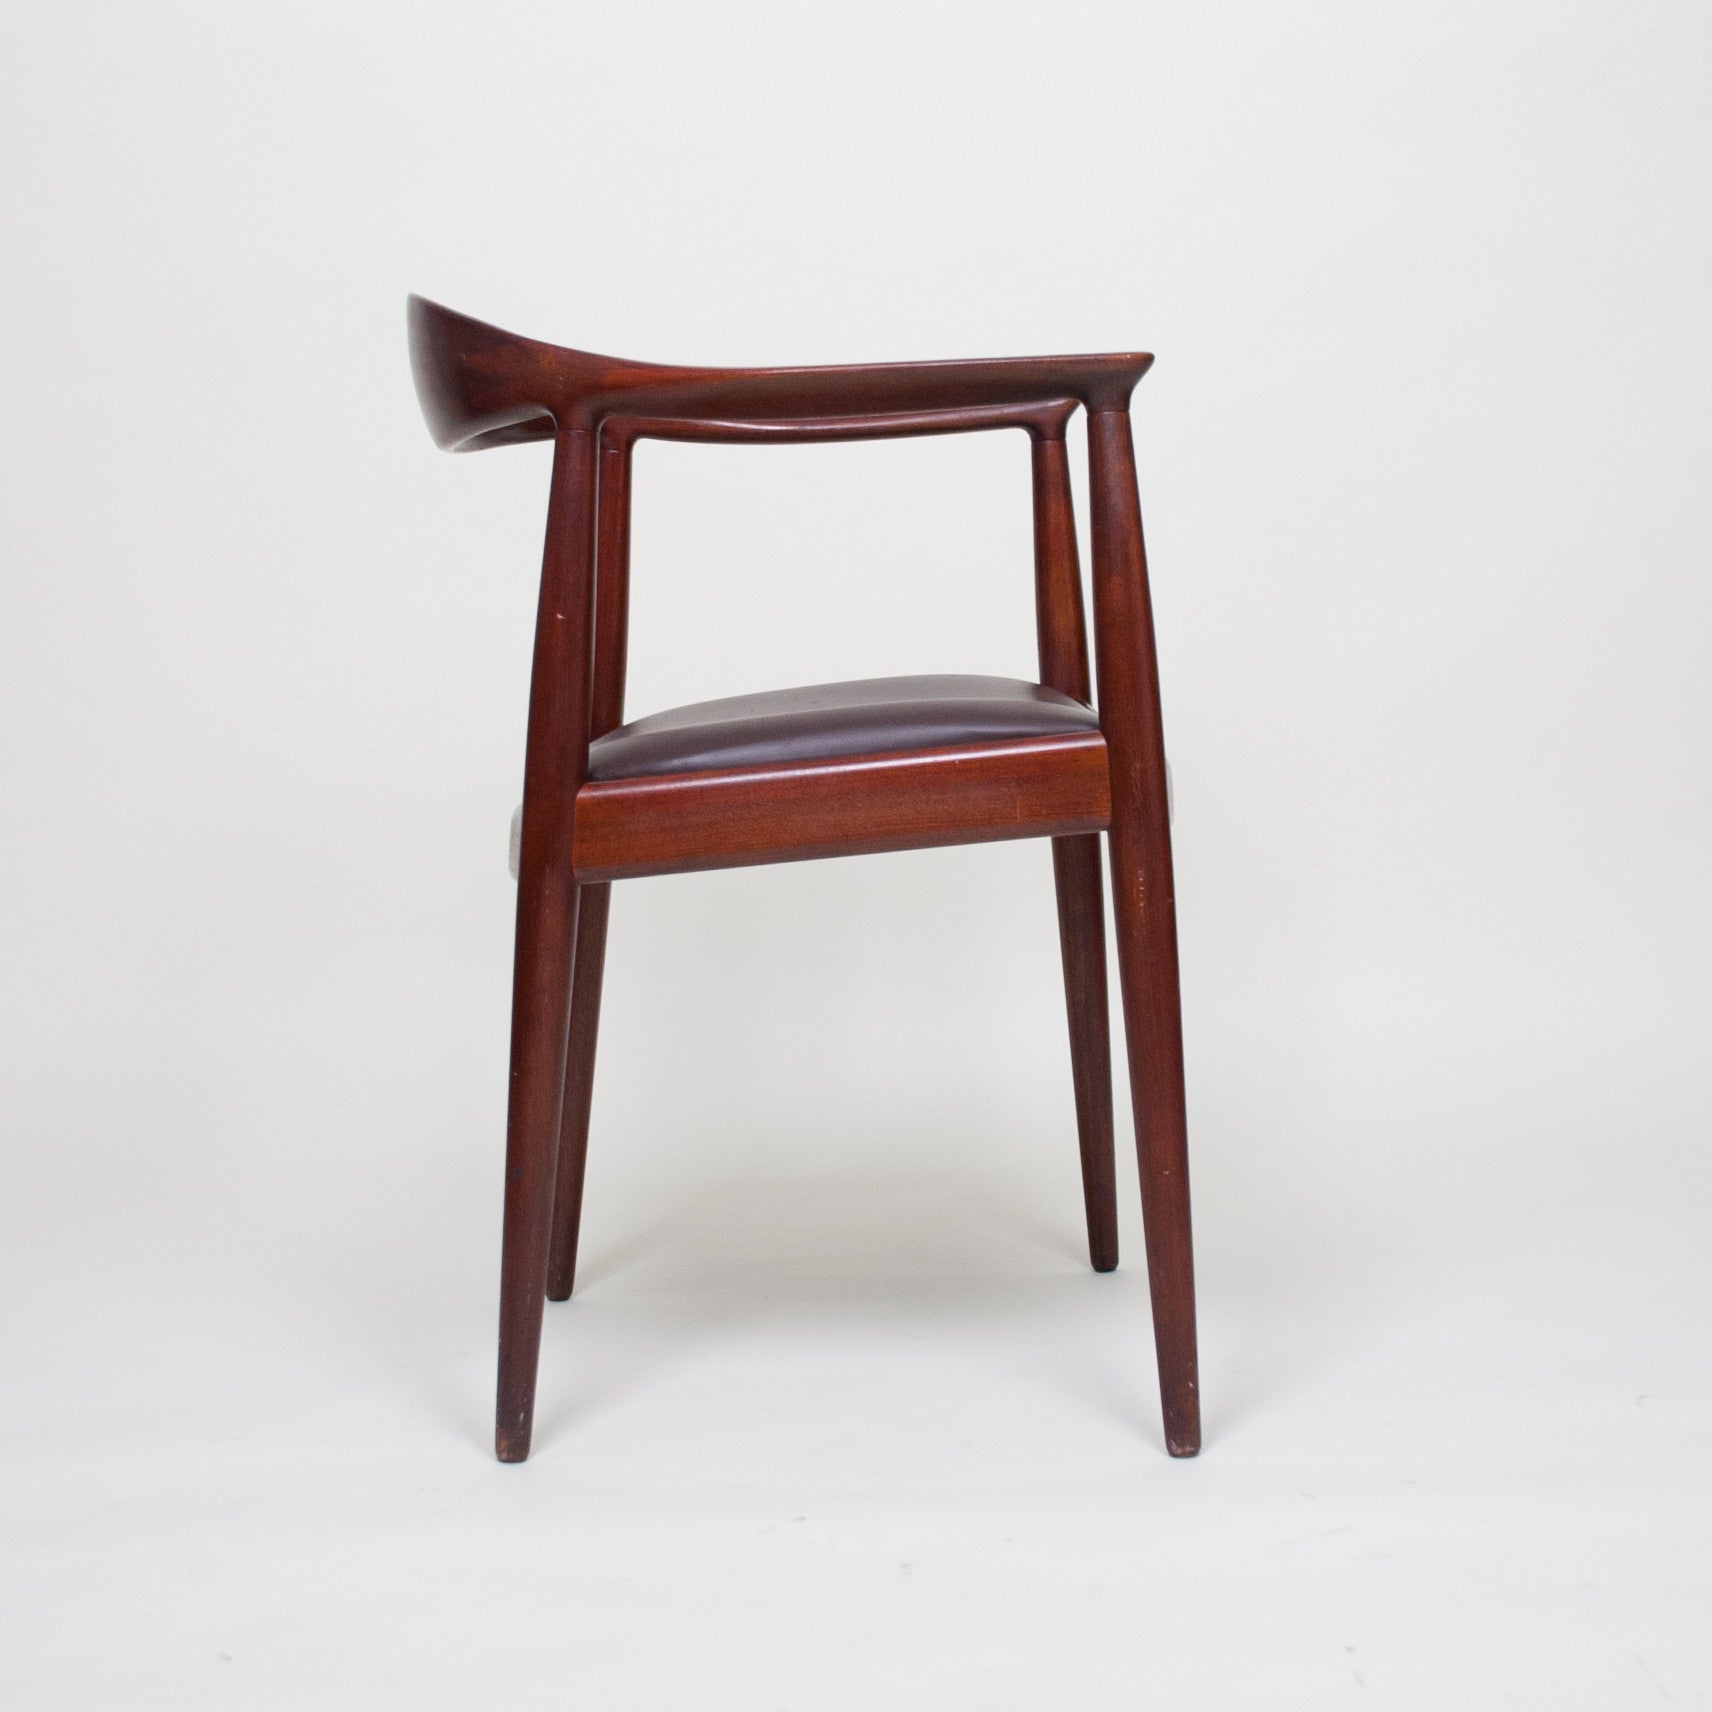 SOLD Hans Wegner Round The Chair Johannes Hansen For Knoll Vintage Teak Armchair